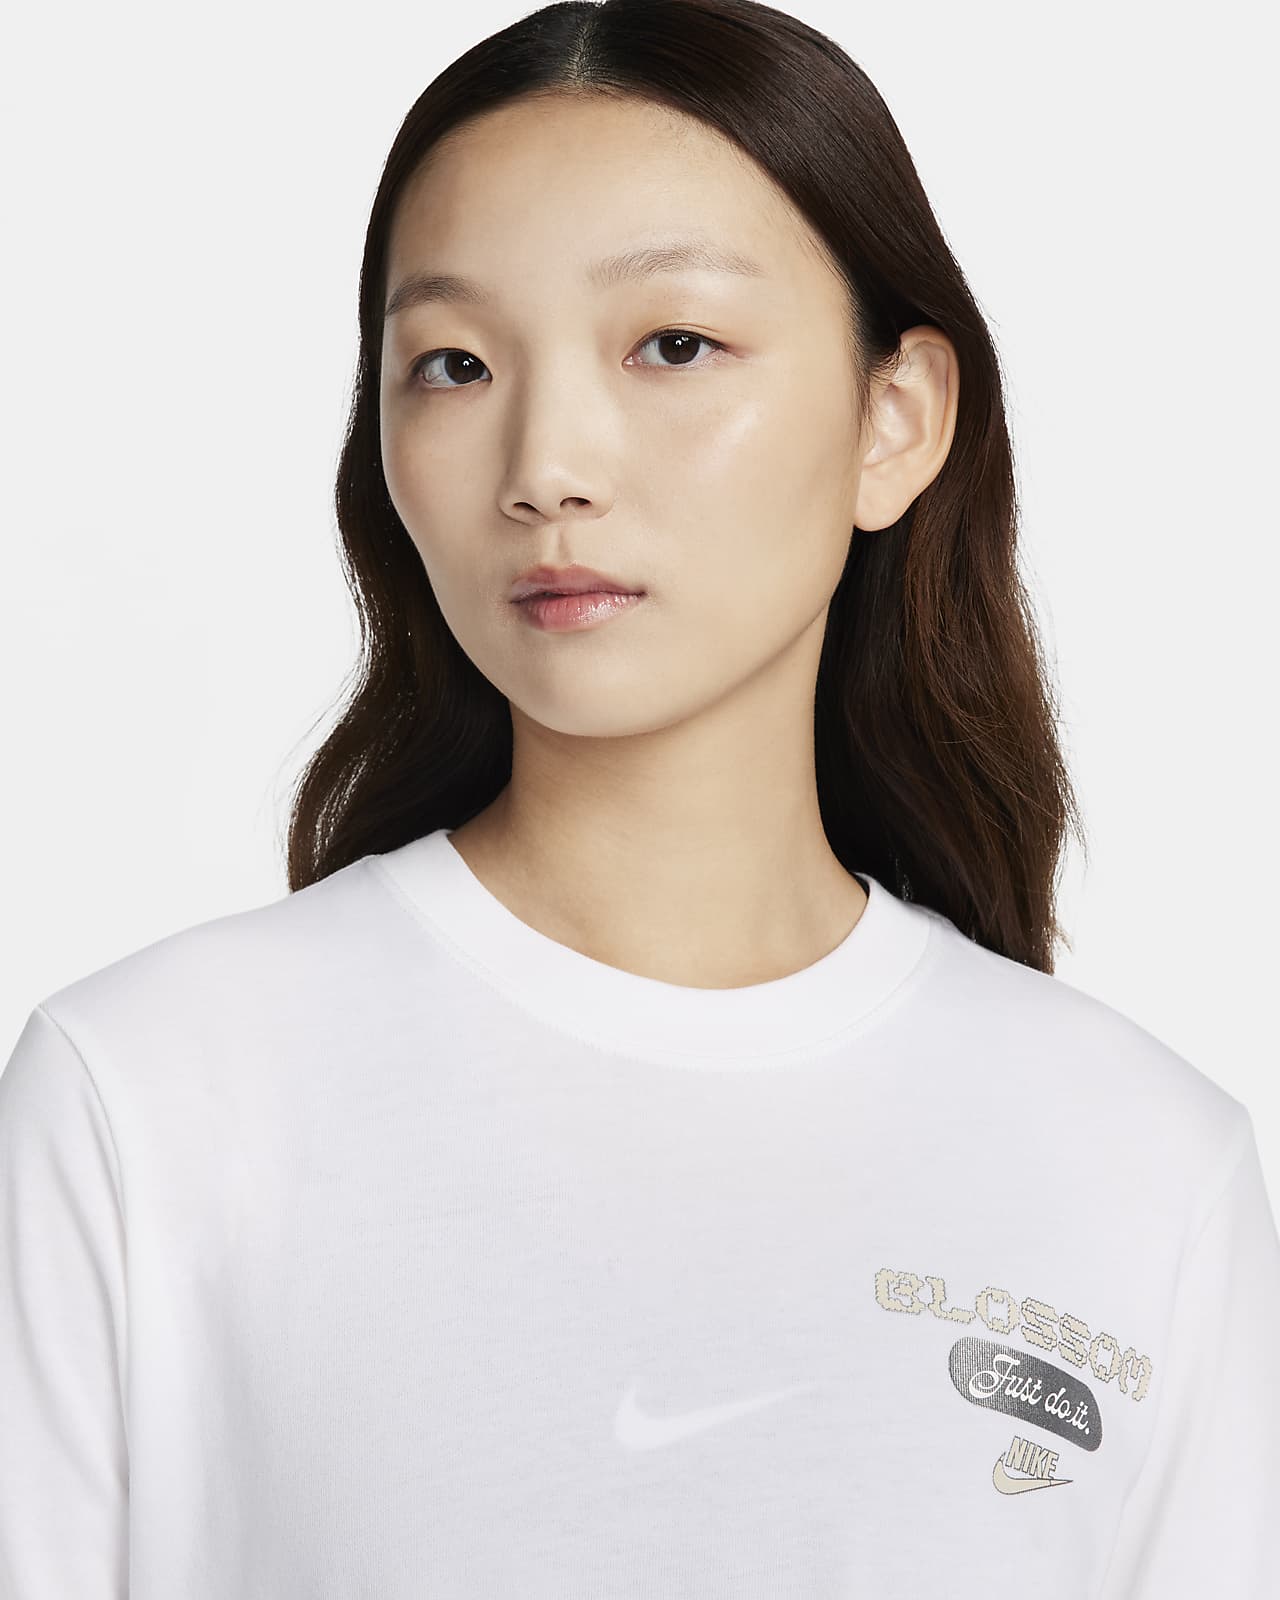 Nike Womens Athletic Shirt Knit Long Sleeve - XL 588534-032 Grey/black, 640135573132 - Nike clothing - Gray